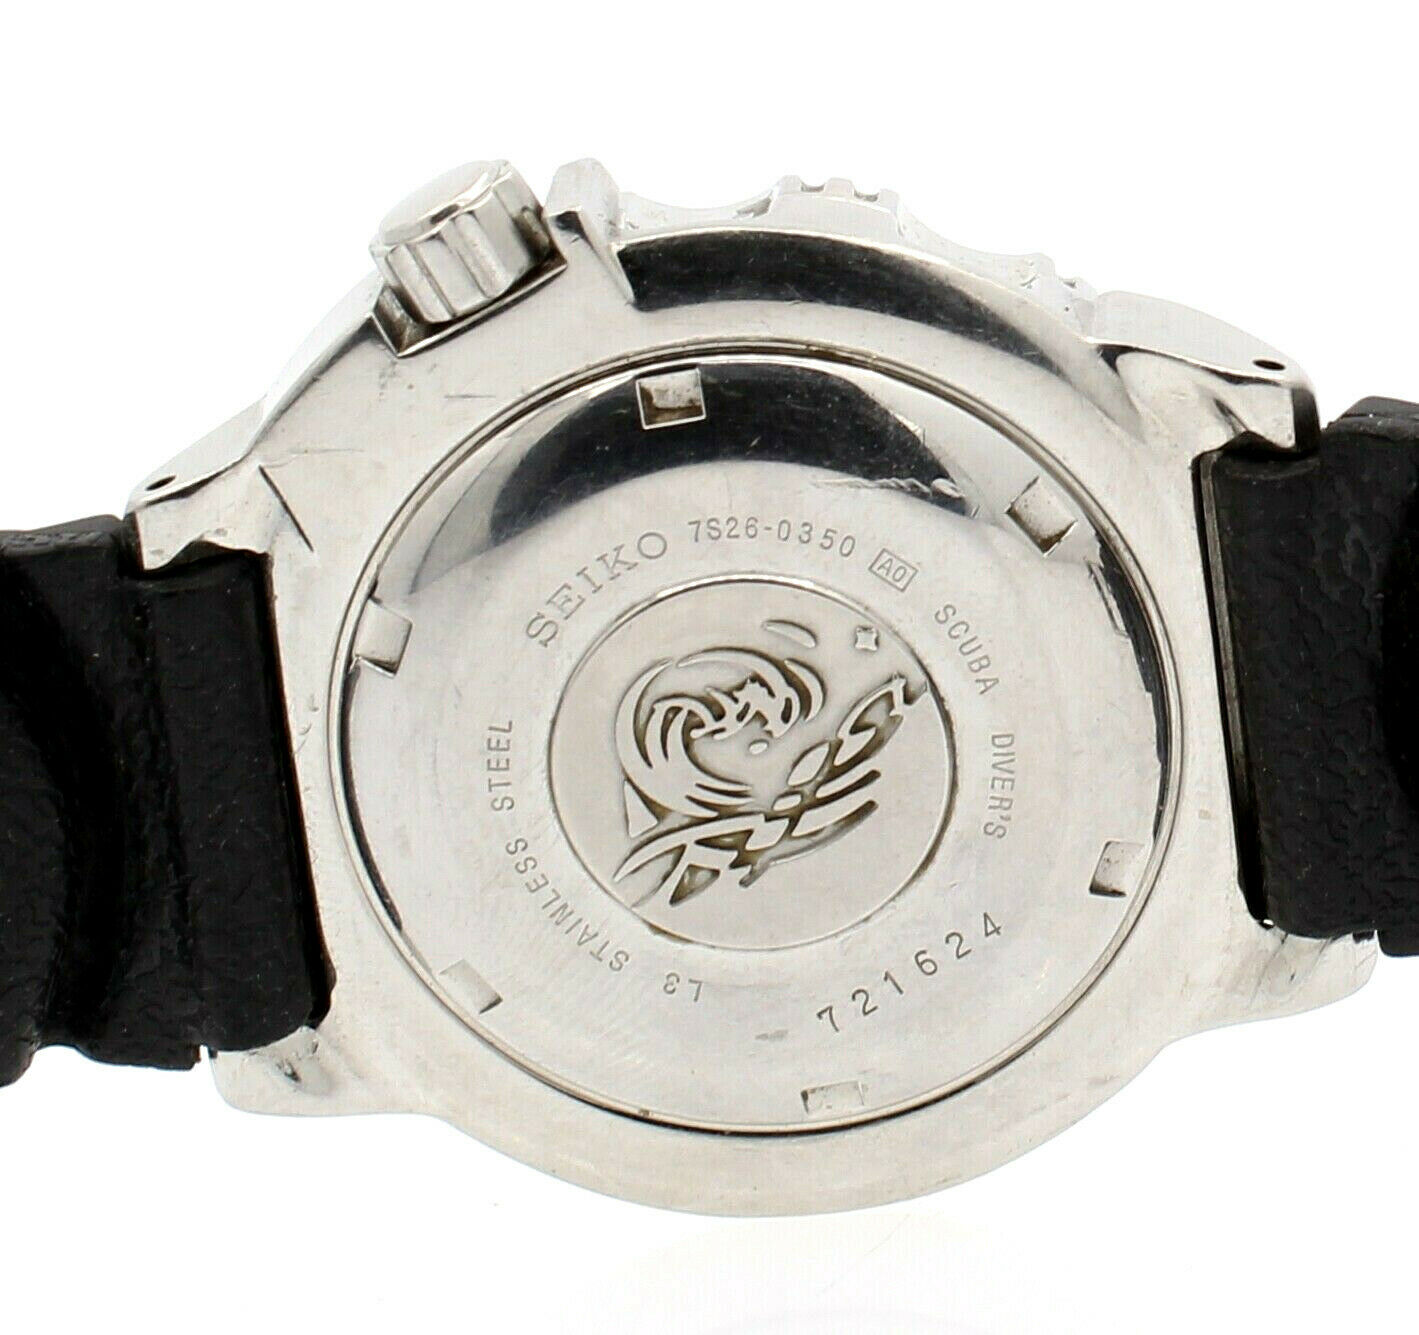 SEIKO Orange Monster Diver's 200M Automatic 43mm Men's Watch 7S26-0350 |  Seiko | Buy at TrueFacet